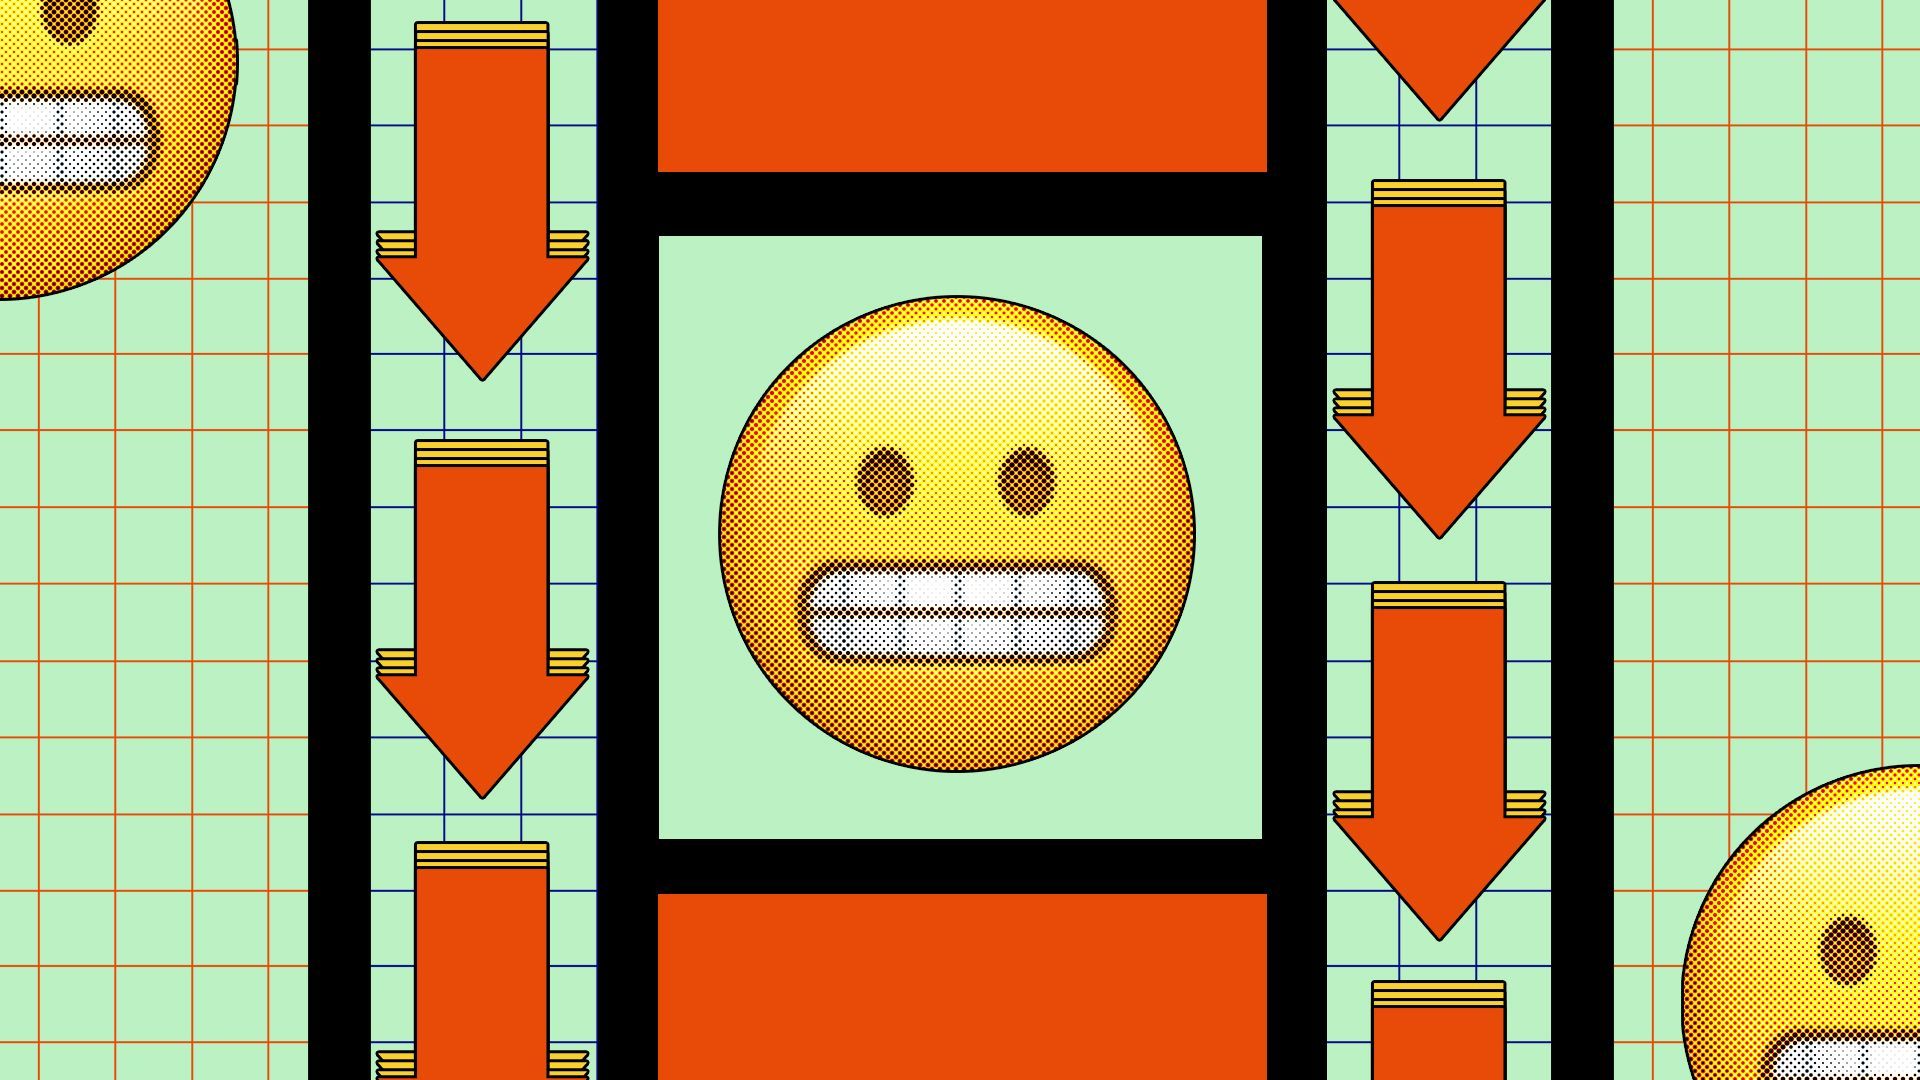 Illustration of a grimace emoji and graphic downward pointing arrows framed inside rectangles with gridded backgrounds.